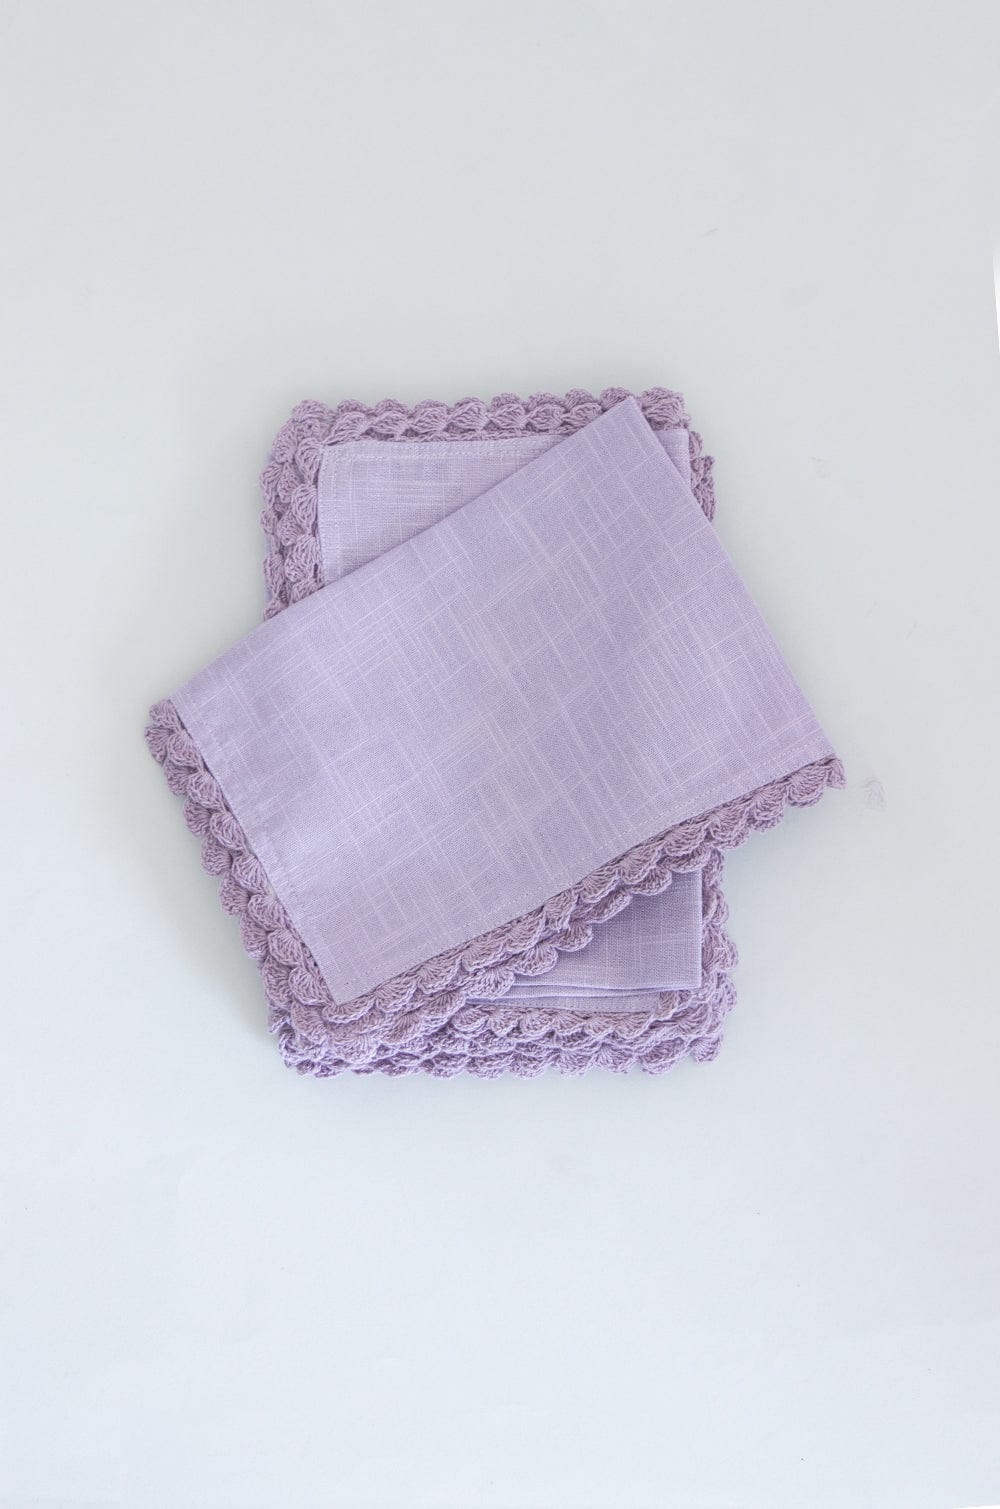 Lavender Fields Hand Crochet Placemats - Set of 6